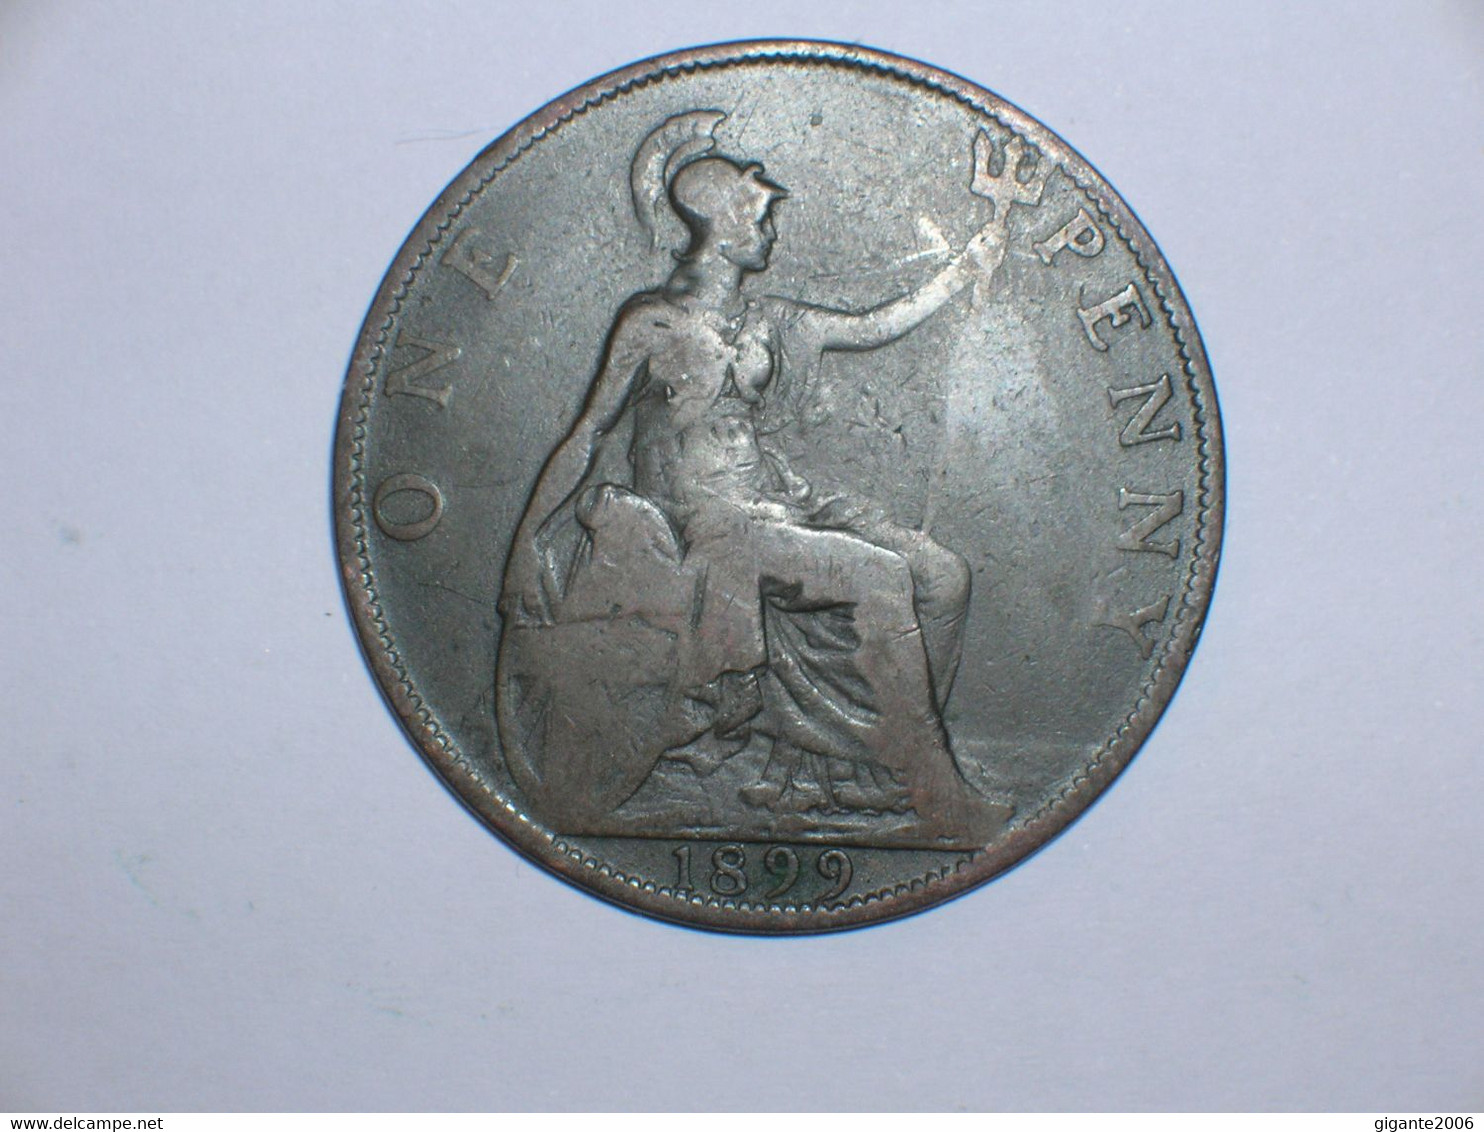 Gran Bretaña. 1 Penique 1899 (10862) - D. 1 Penny